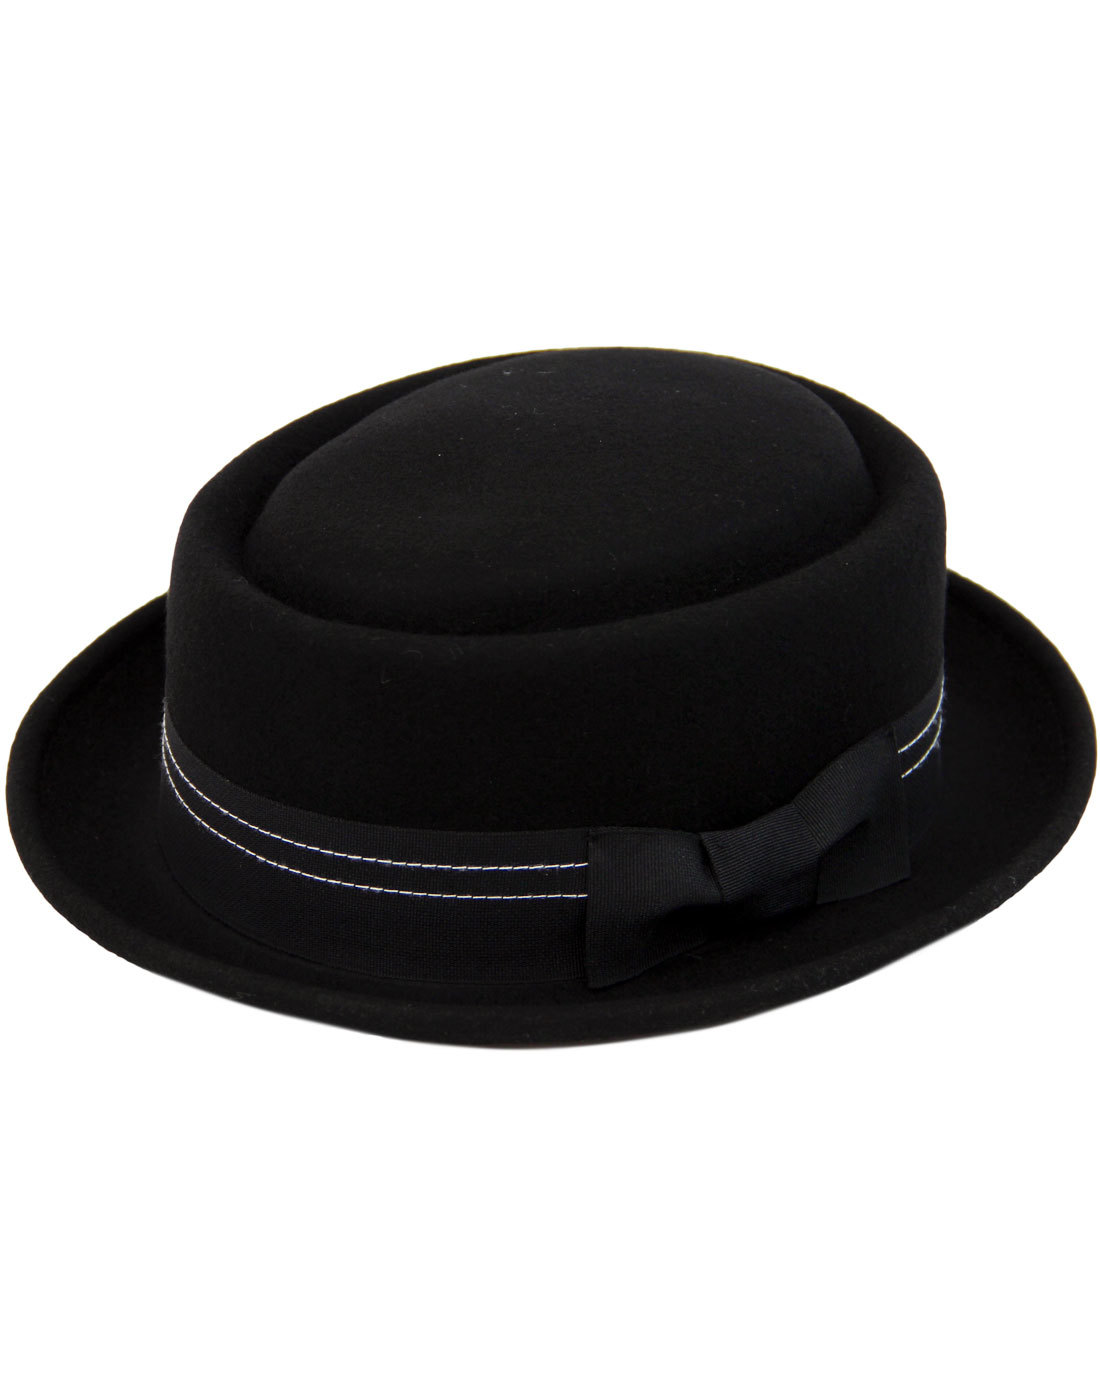 MADCAP ENGLAND Mod Revival Wool Felt Porkpie Hat